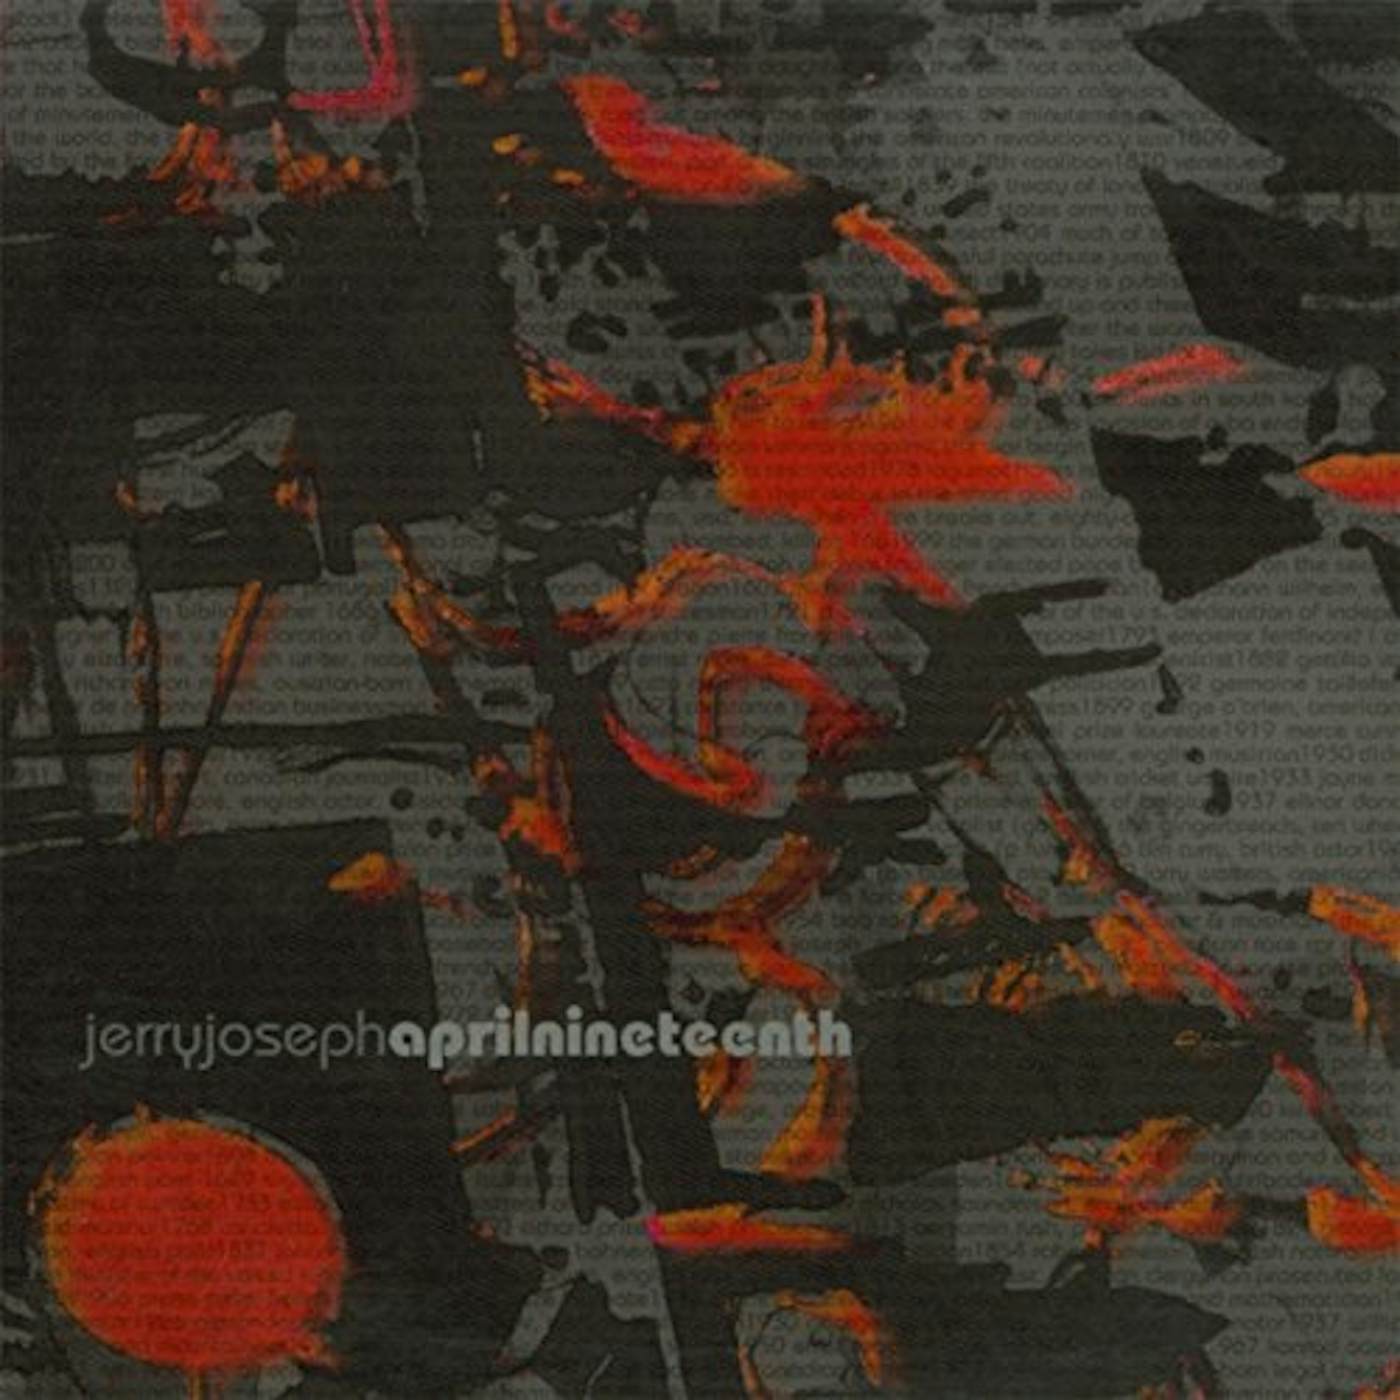 Jerry Joseph APRIL NINETEENTH CD